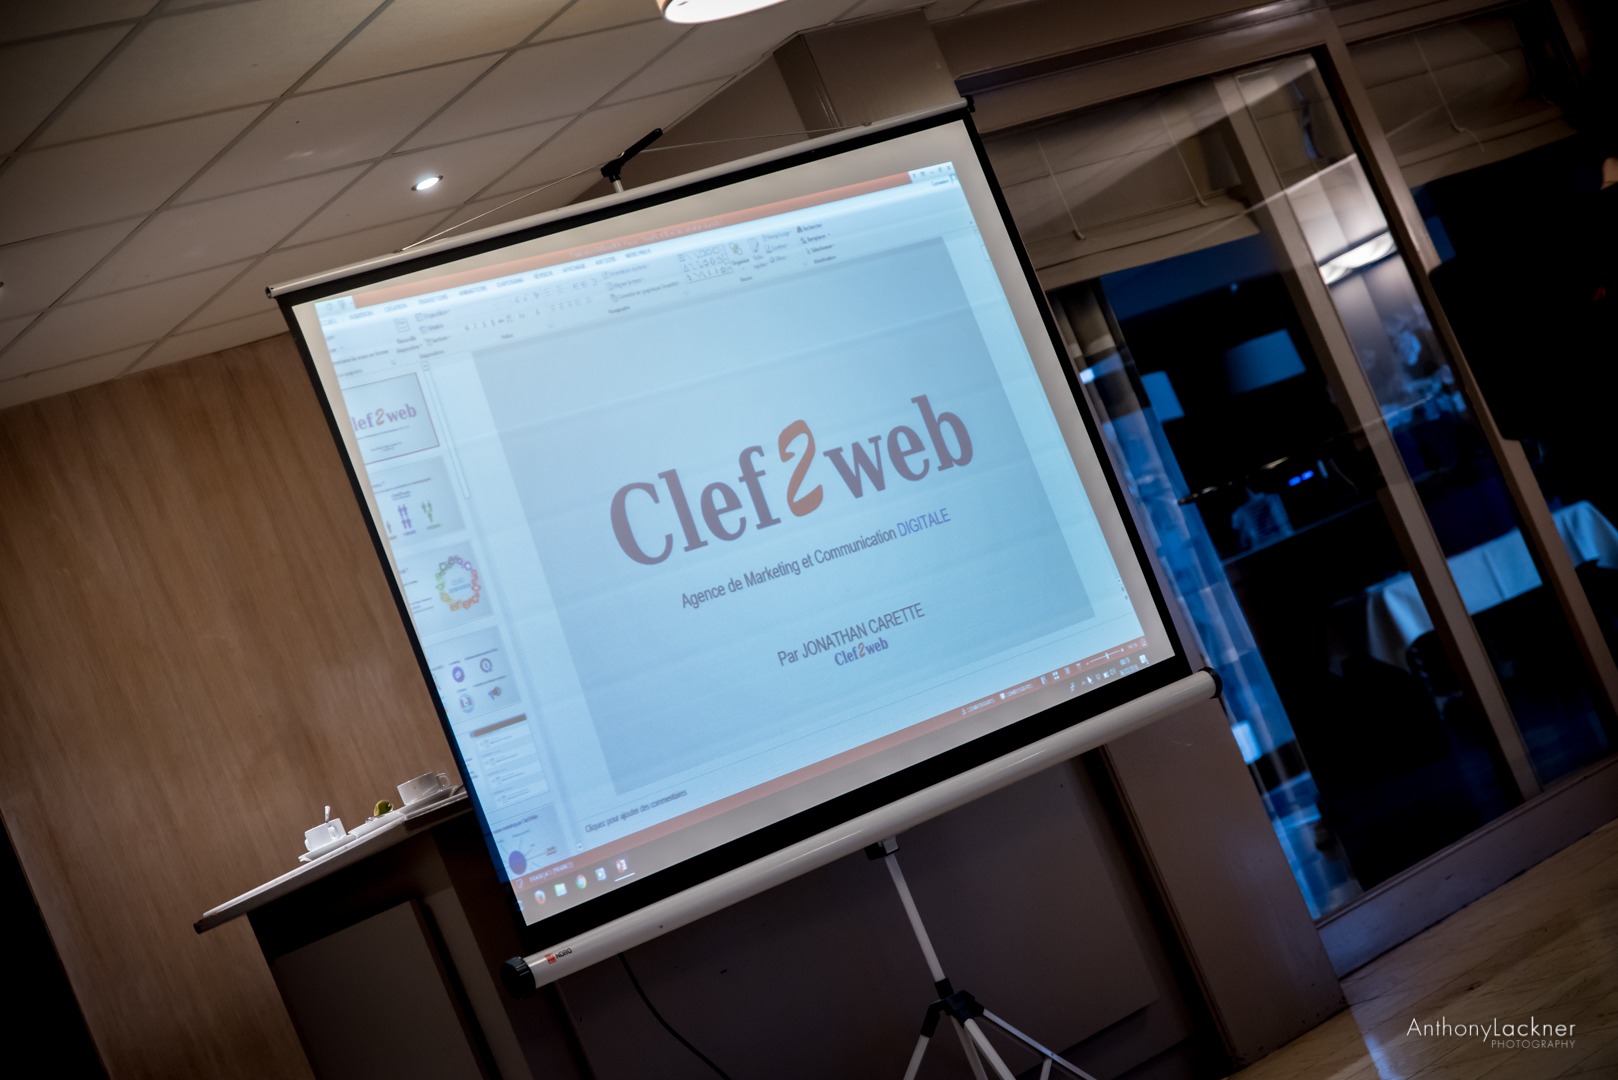 Clef2web, agence de communication digitale